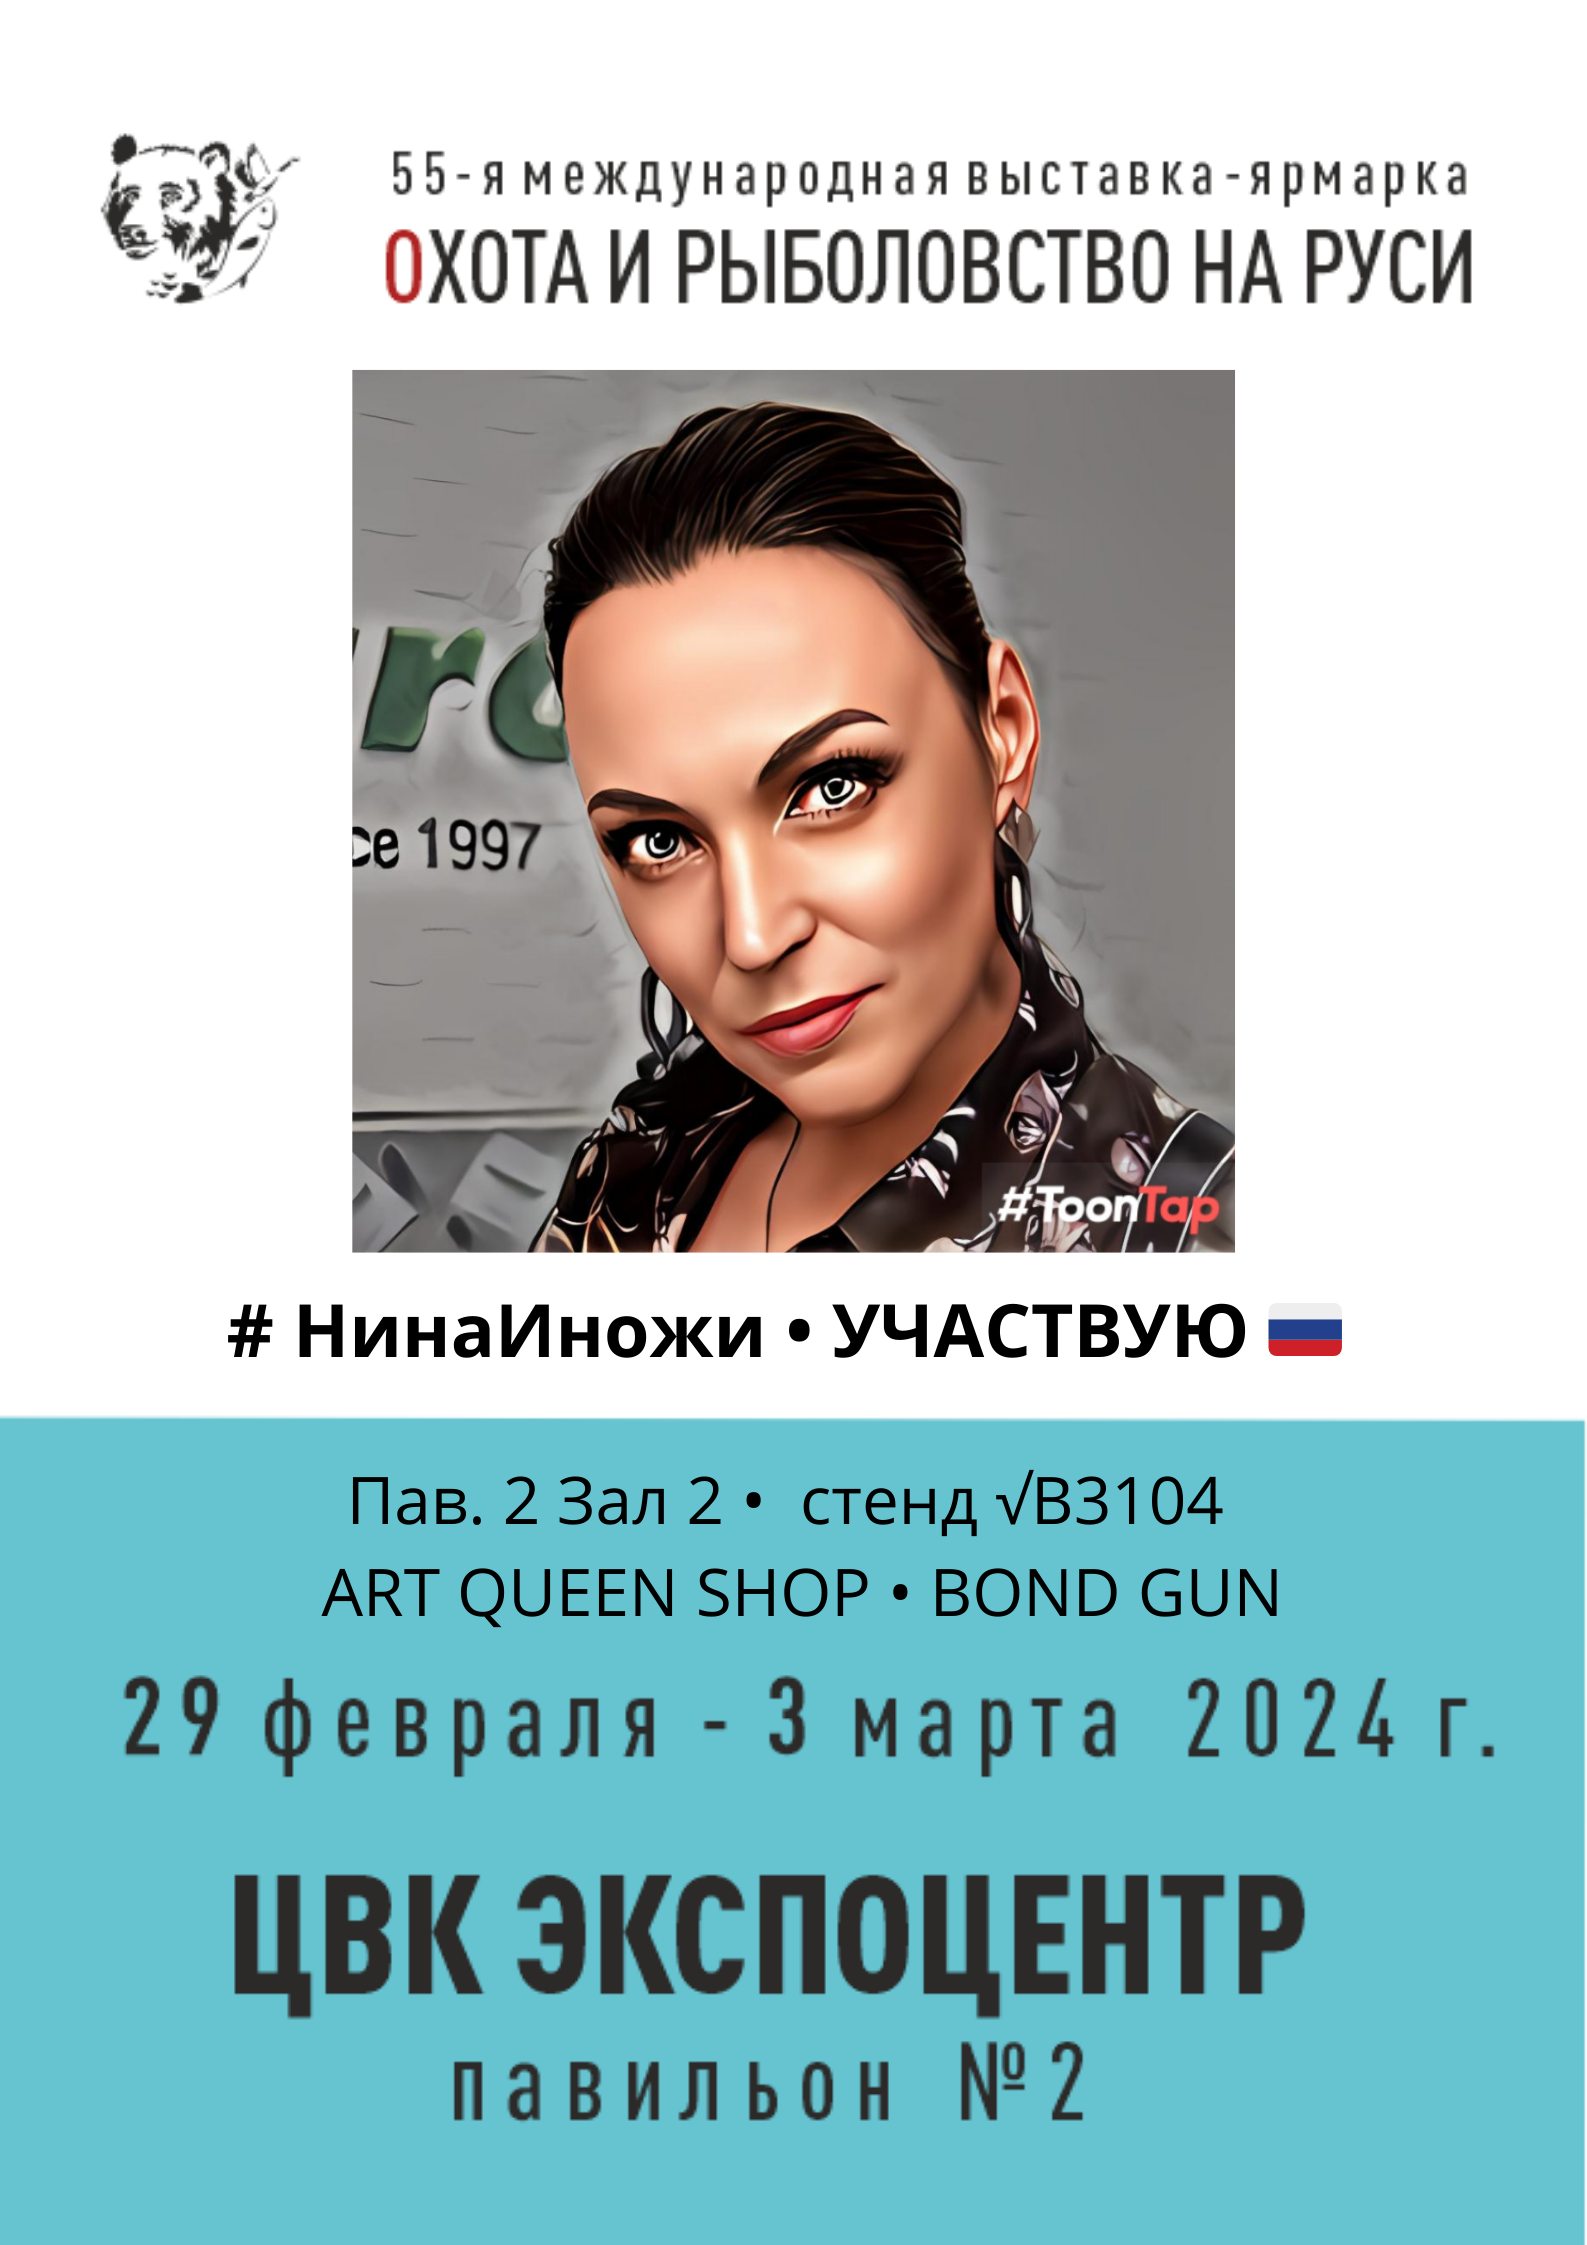 Охота и Рыболовство на Руси 29 февраля-3 марта 2024 Москва Экспоцентр Афиша Art Queen shop